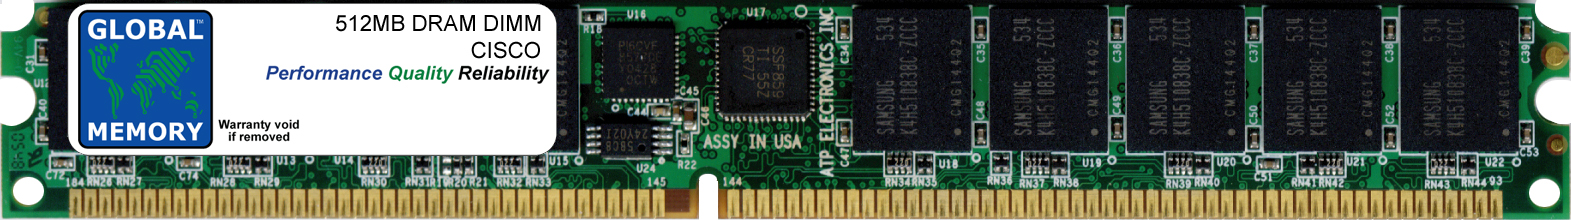 512MB DRAM DIMM MEMORY RAM FOR CISCO 2951 ROUTER (MEM-2951-512MB) - Click Image to Close